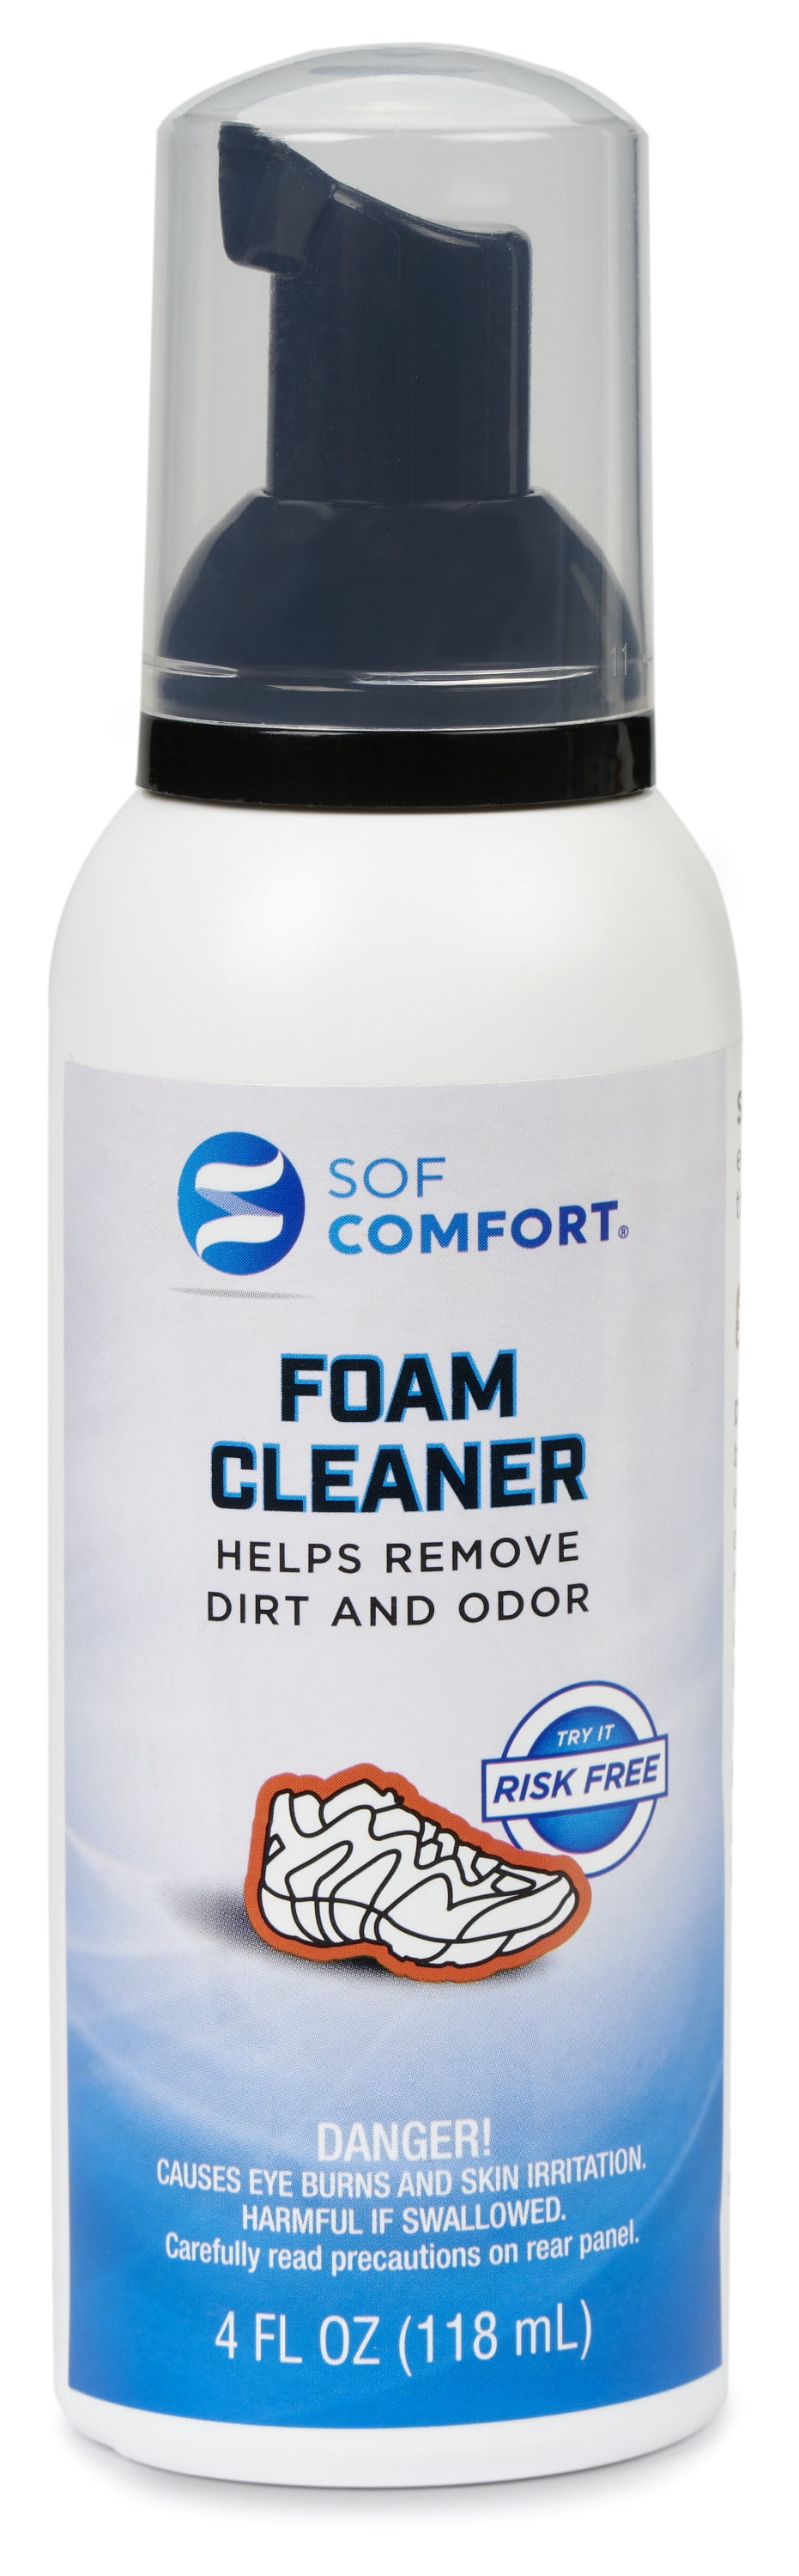 Sof Comfort Foaming Shoe Cleaner Kit, 4 OZ